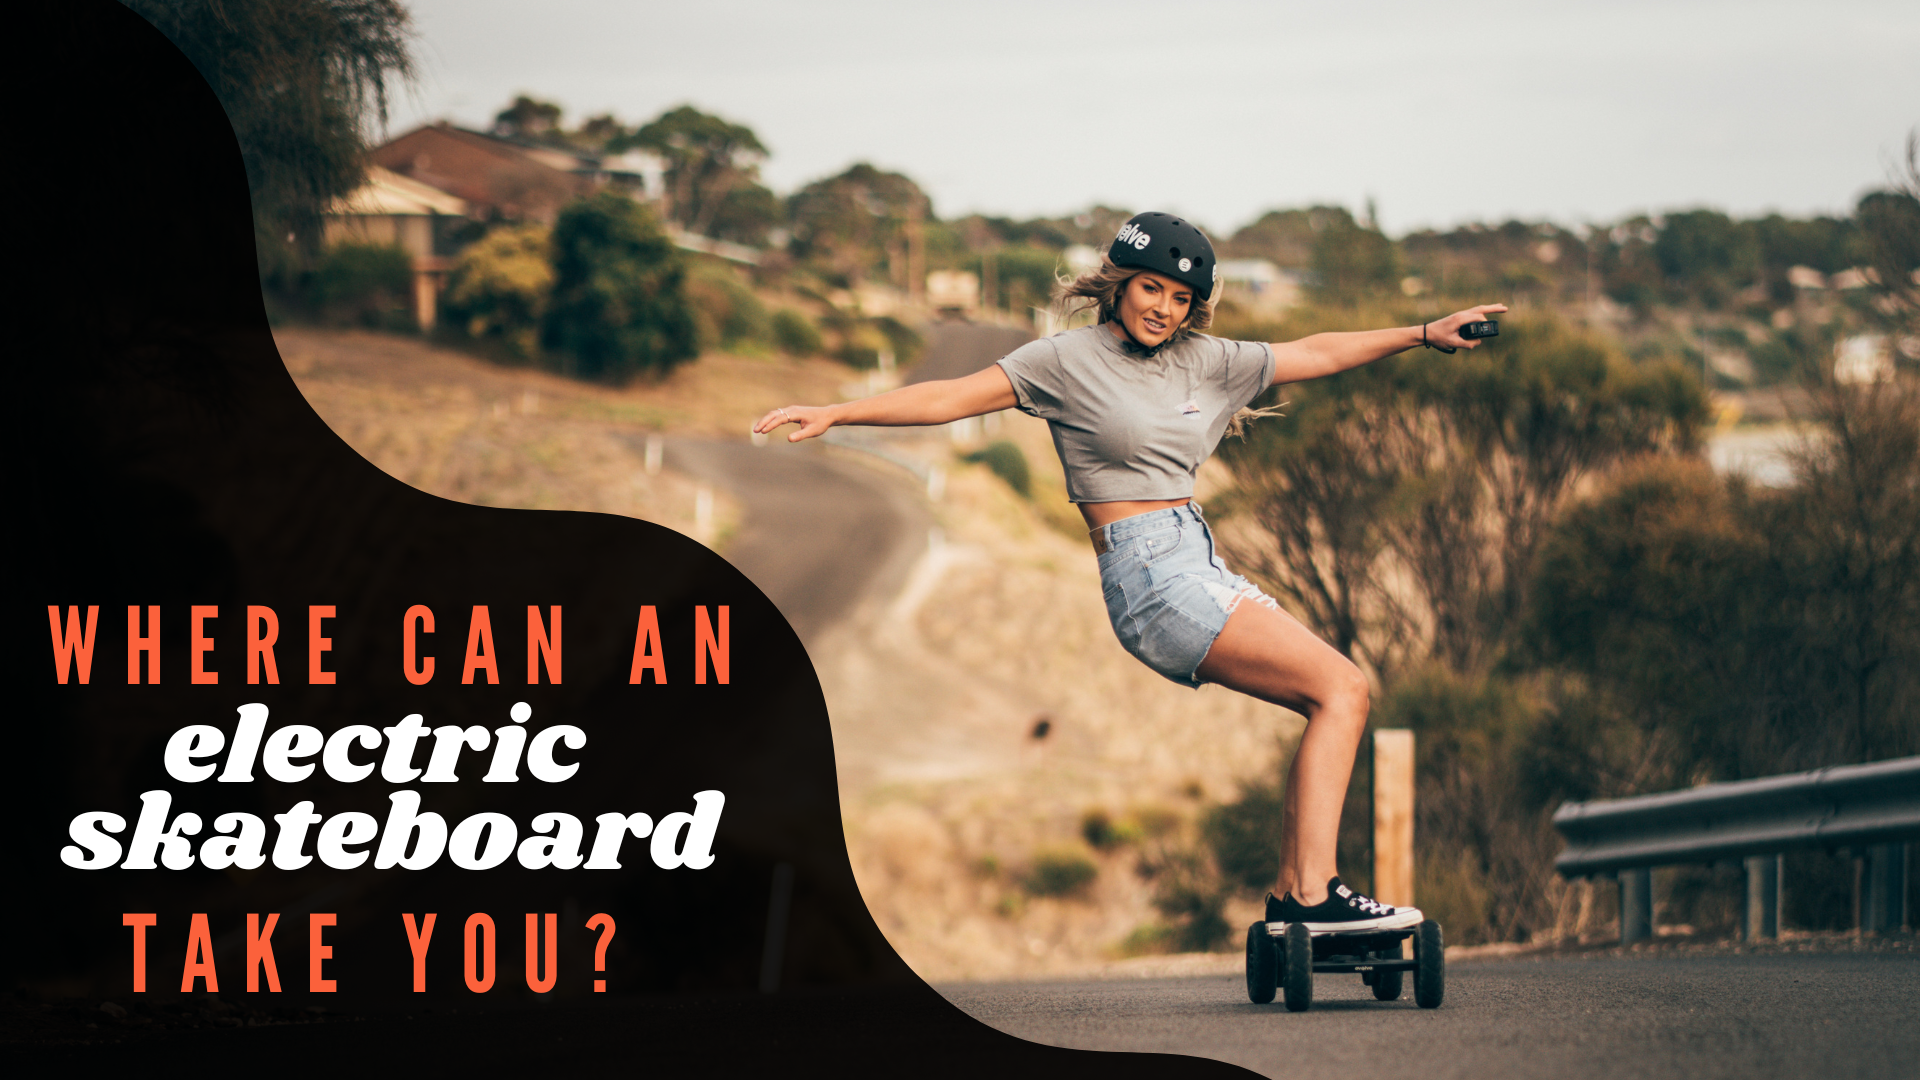 Where Can an Electric Skateboard Take You?